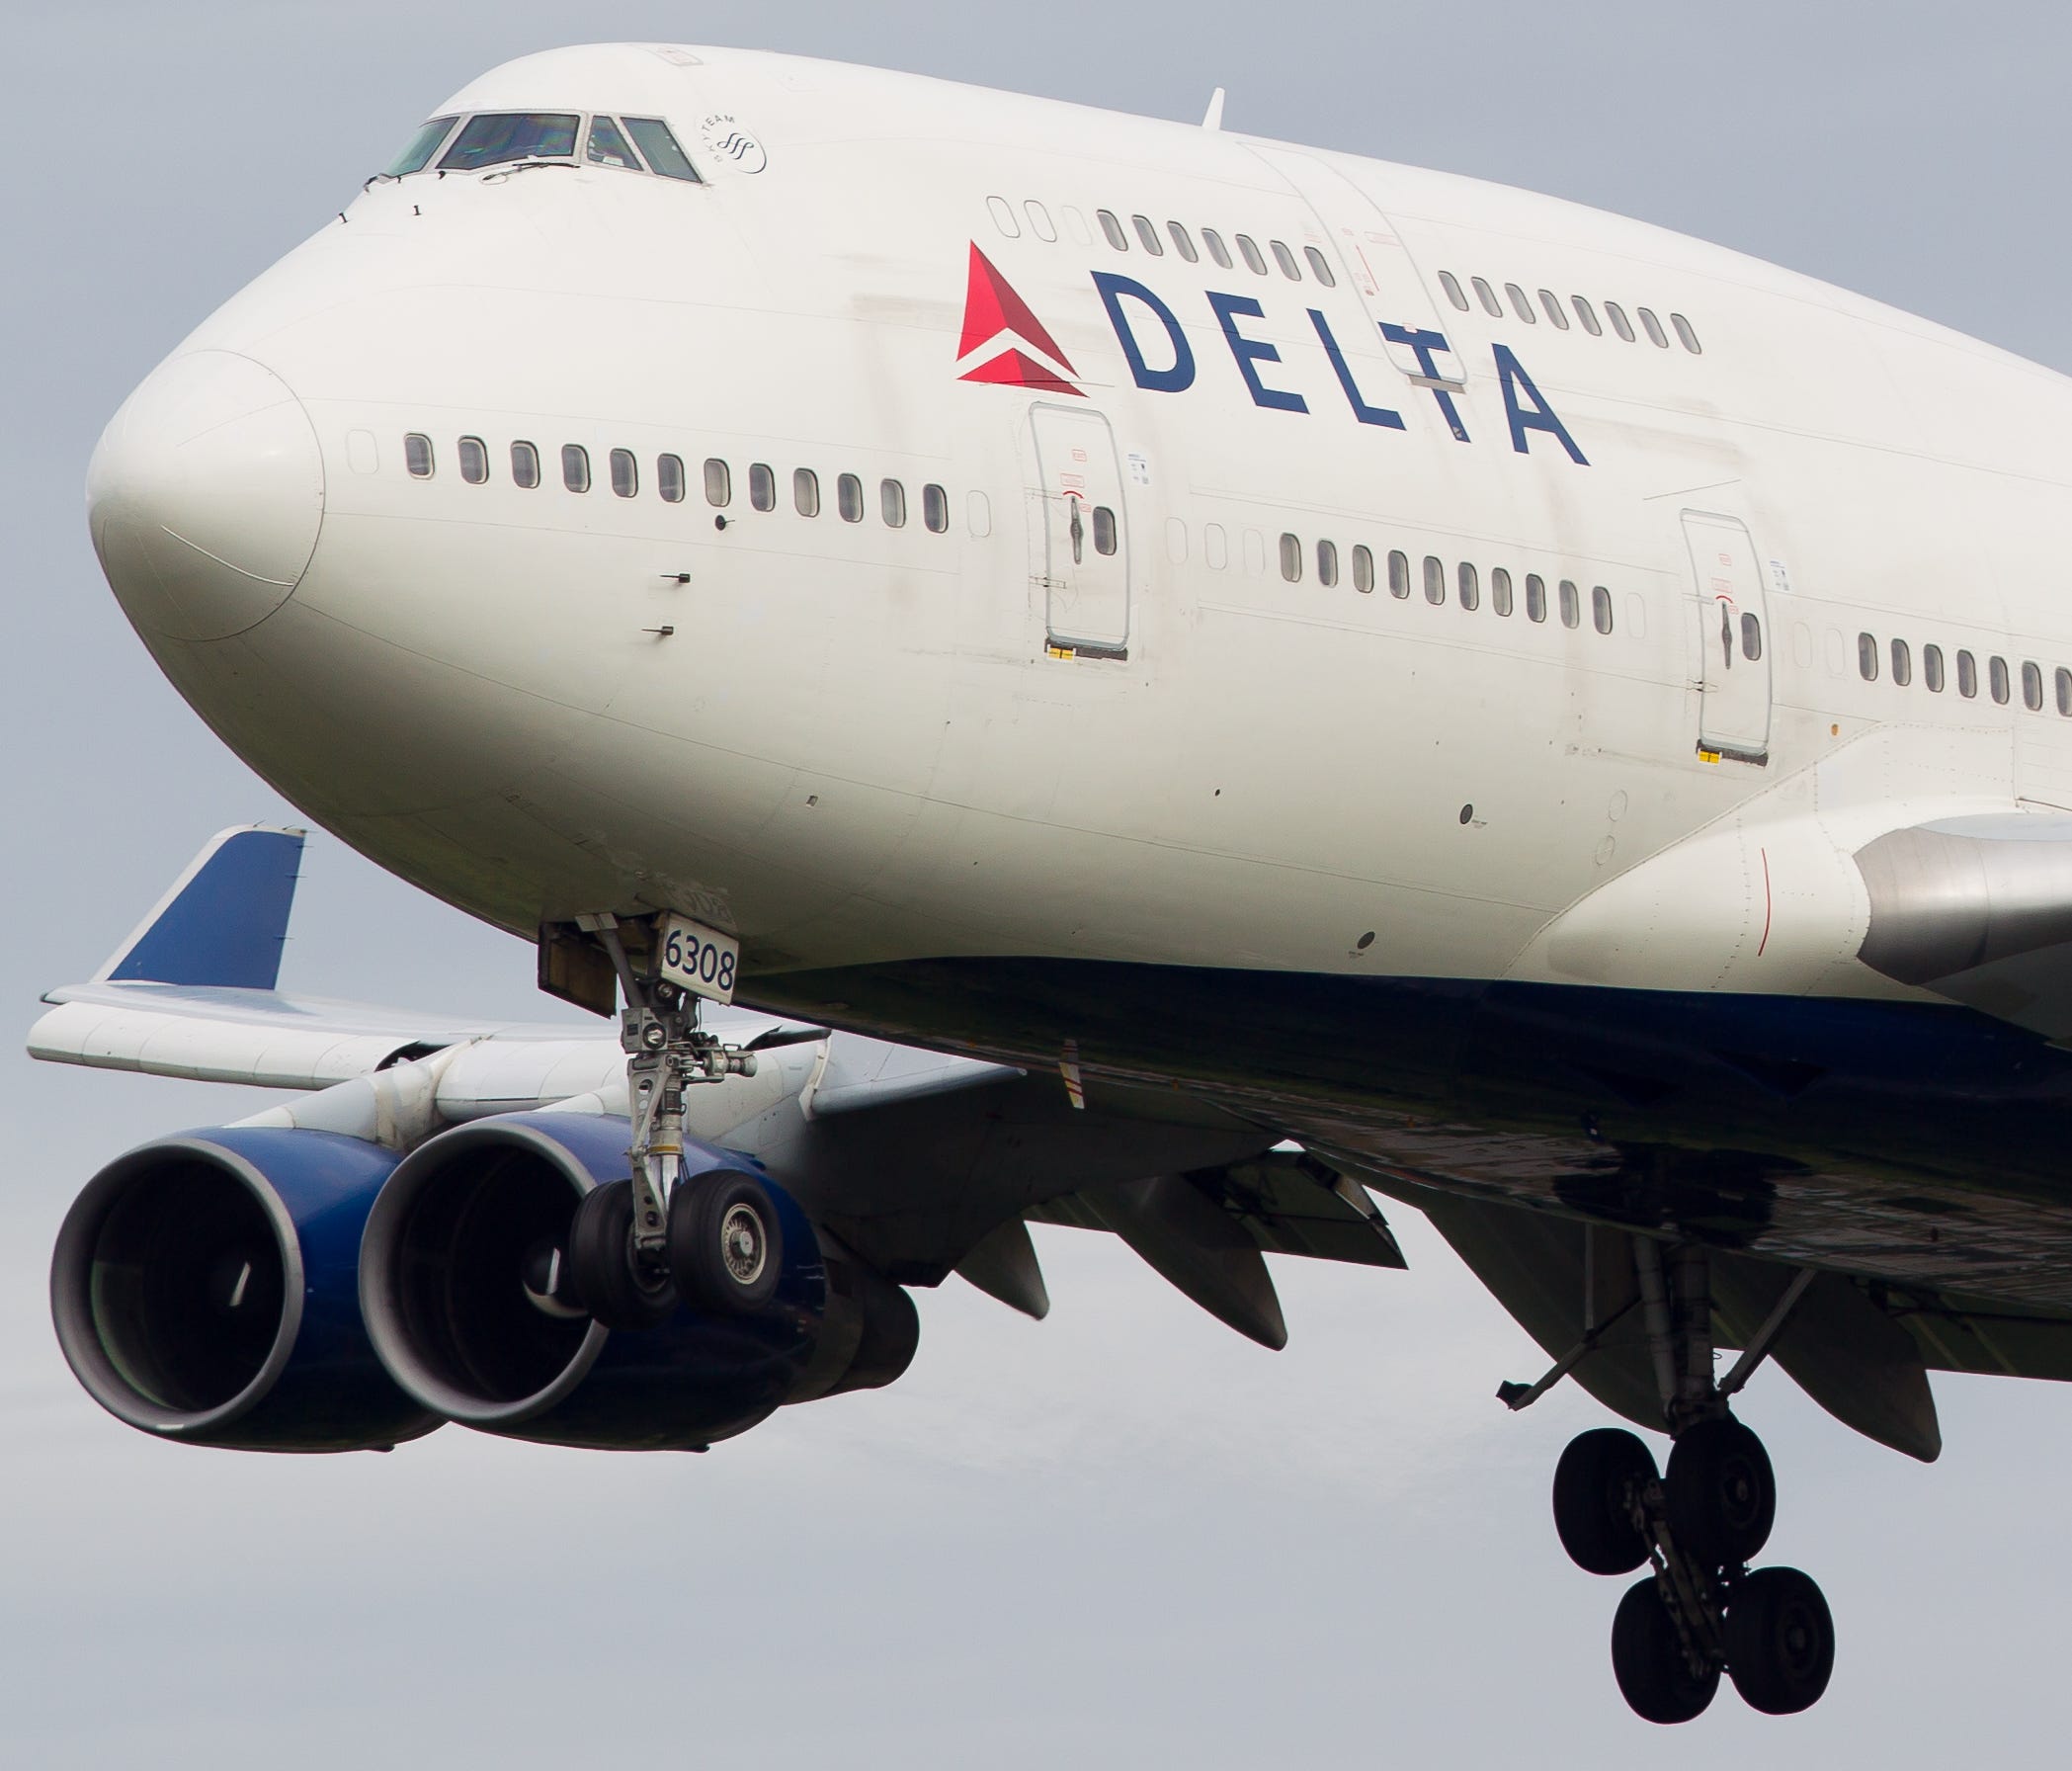 A Delta Air Lines Boeing 747-400 jet is seen in flight in June 2016.